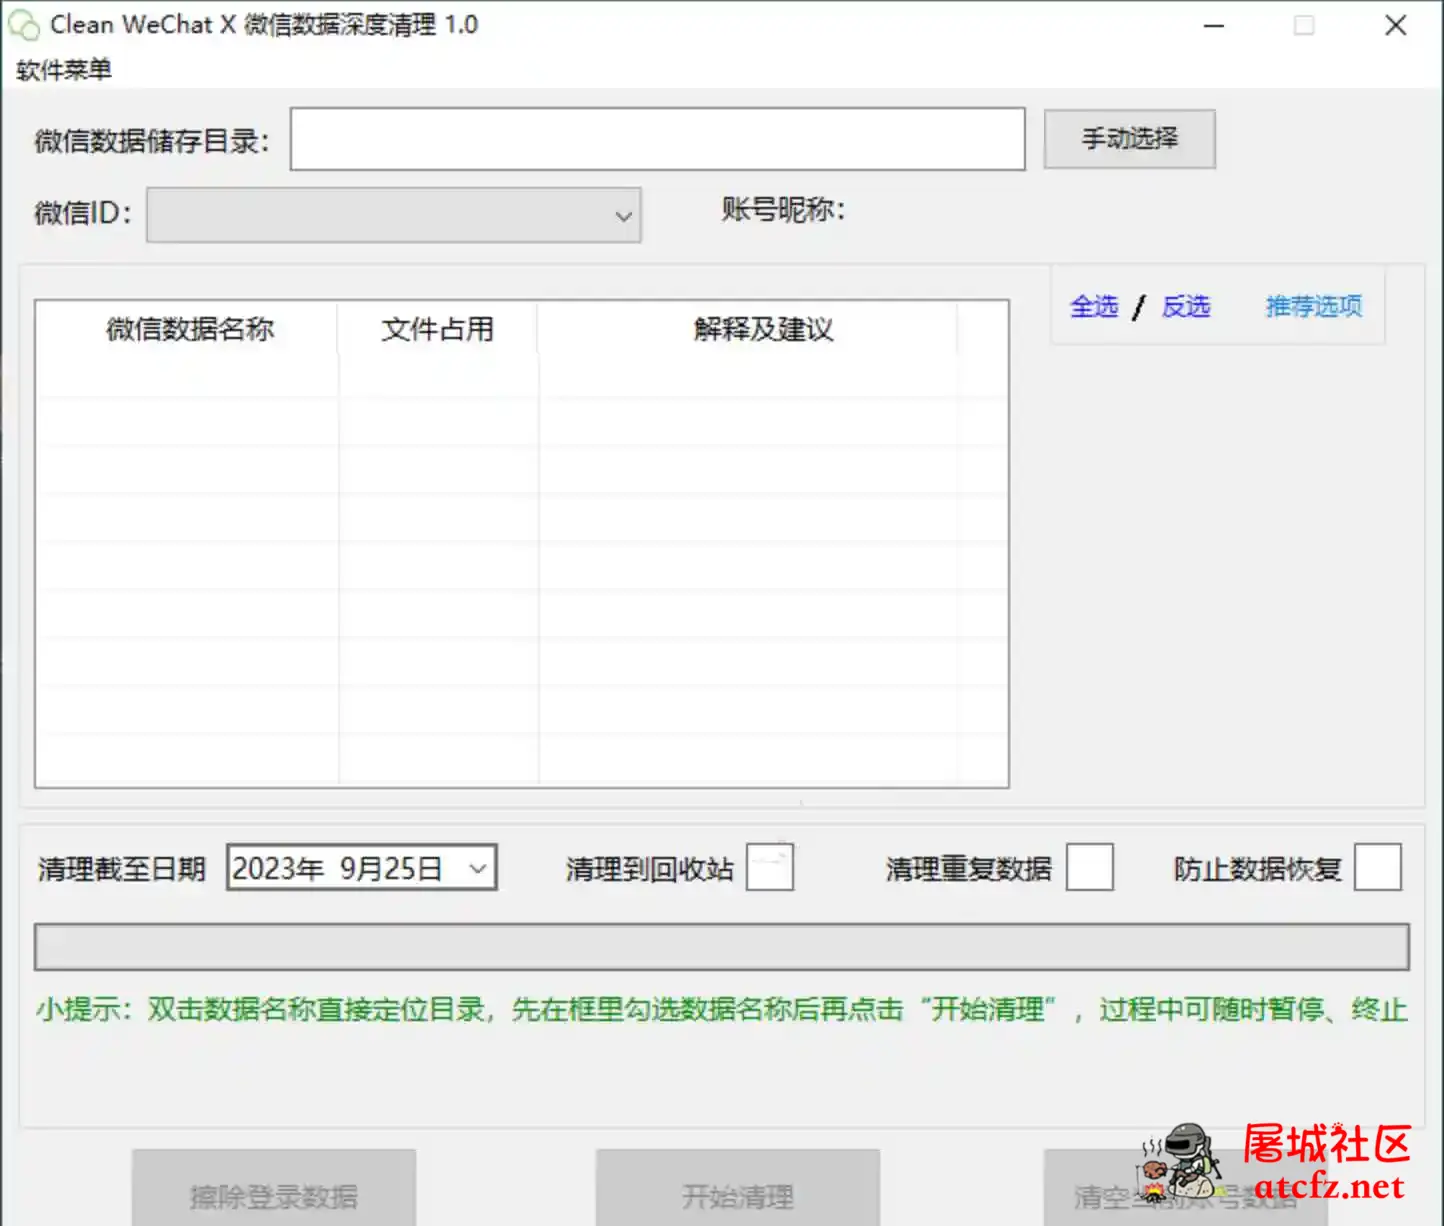 Clean WeChat X微信深度清理v3.0微信数据深度清理软件 屠城辅助网www.tcfz1.com3776